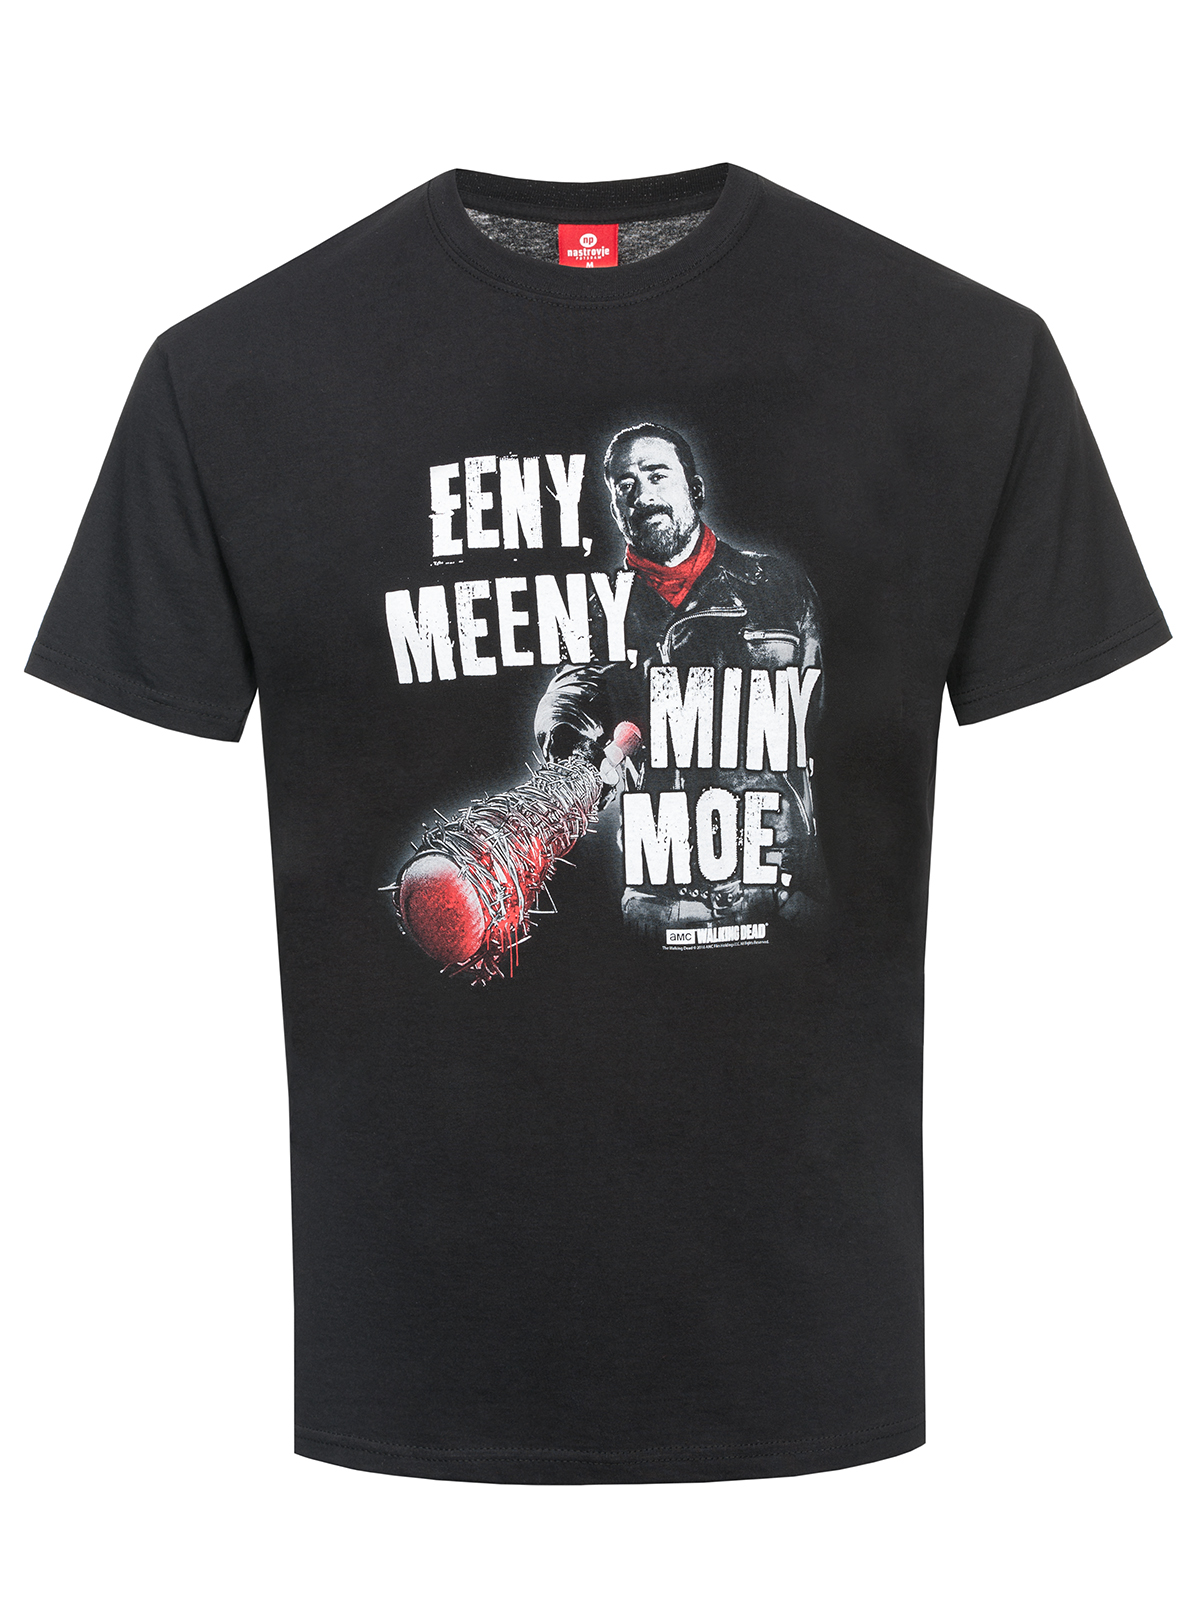 Amazon.com: The Walking Dead Negan Eeny Meeny Miny Moe T-Shirt ...